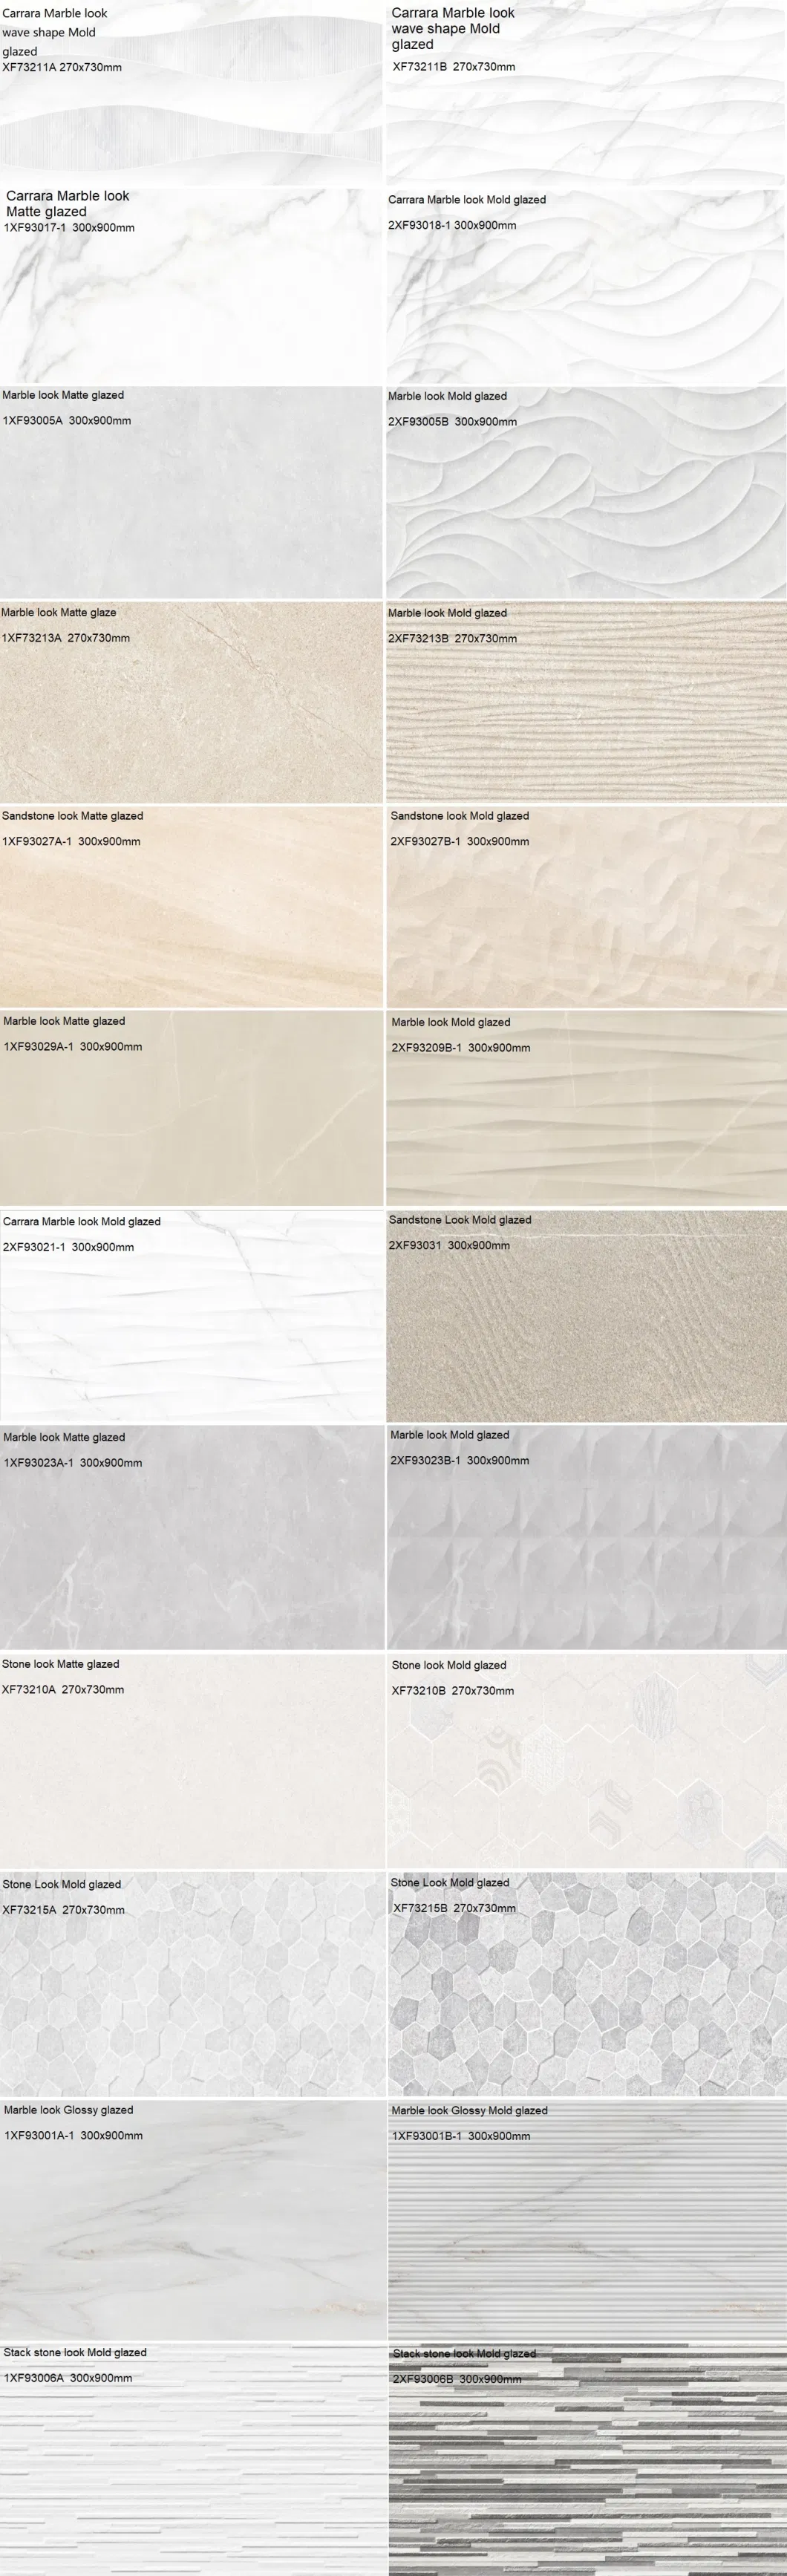 New Design 3D Carrara White Ceramic Wall Tile for Home Decoration (300X900mm)